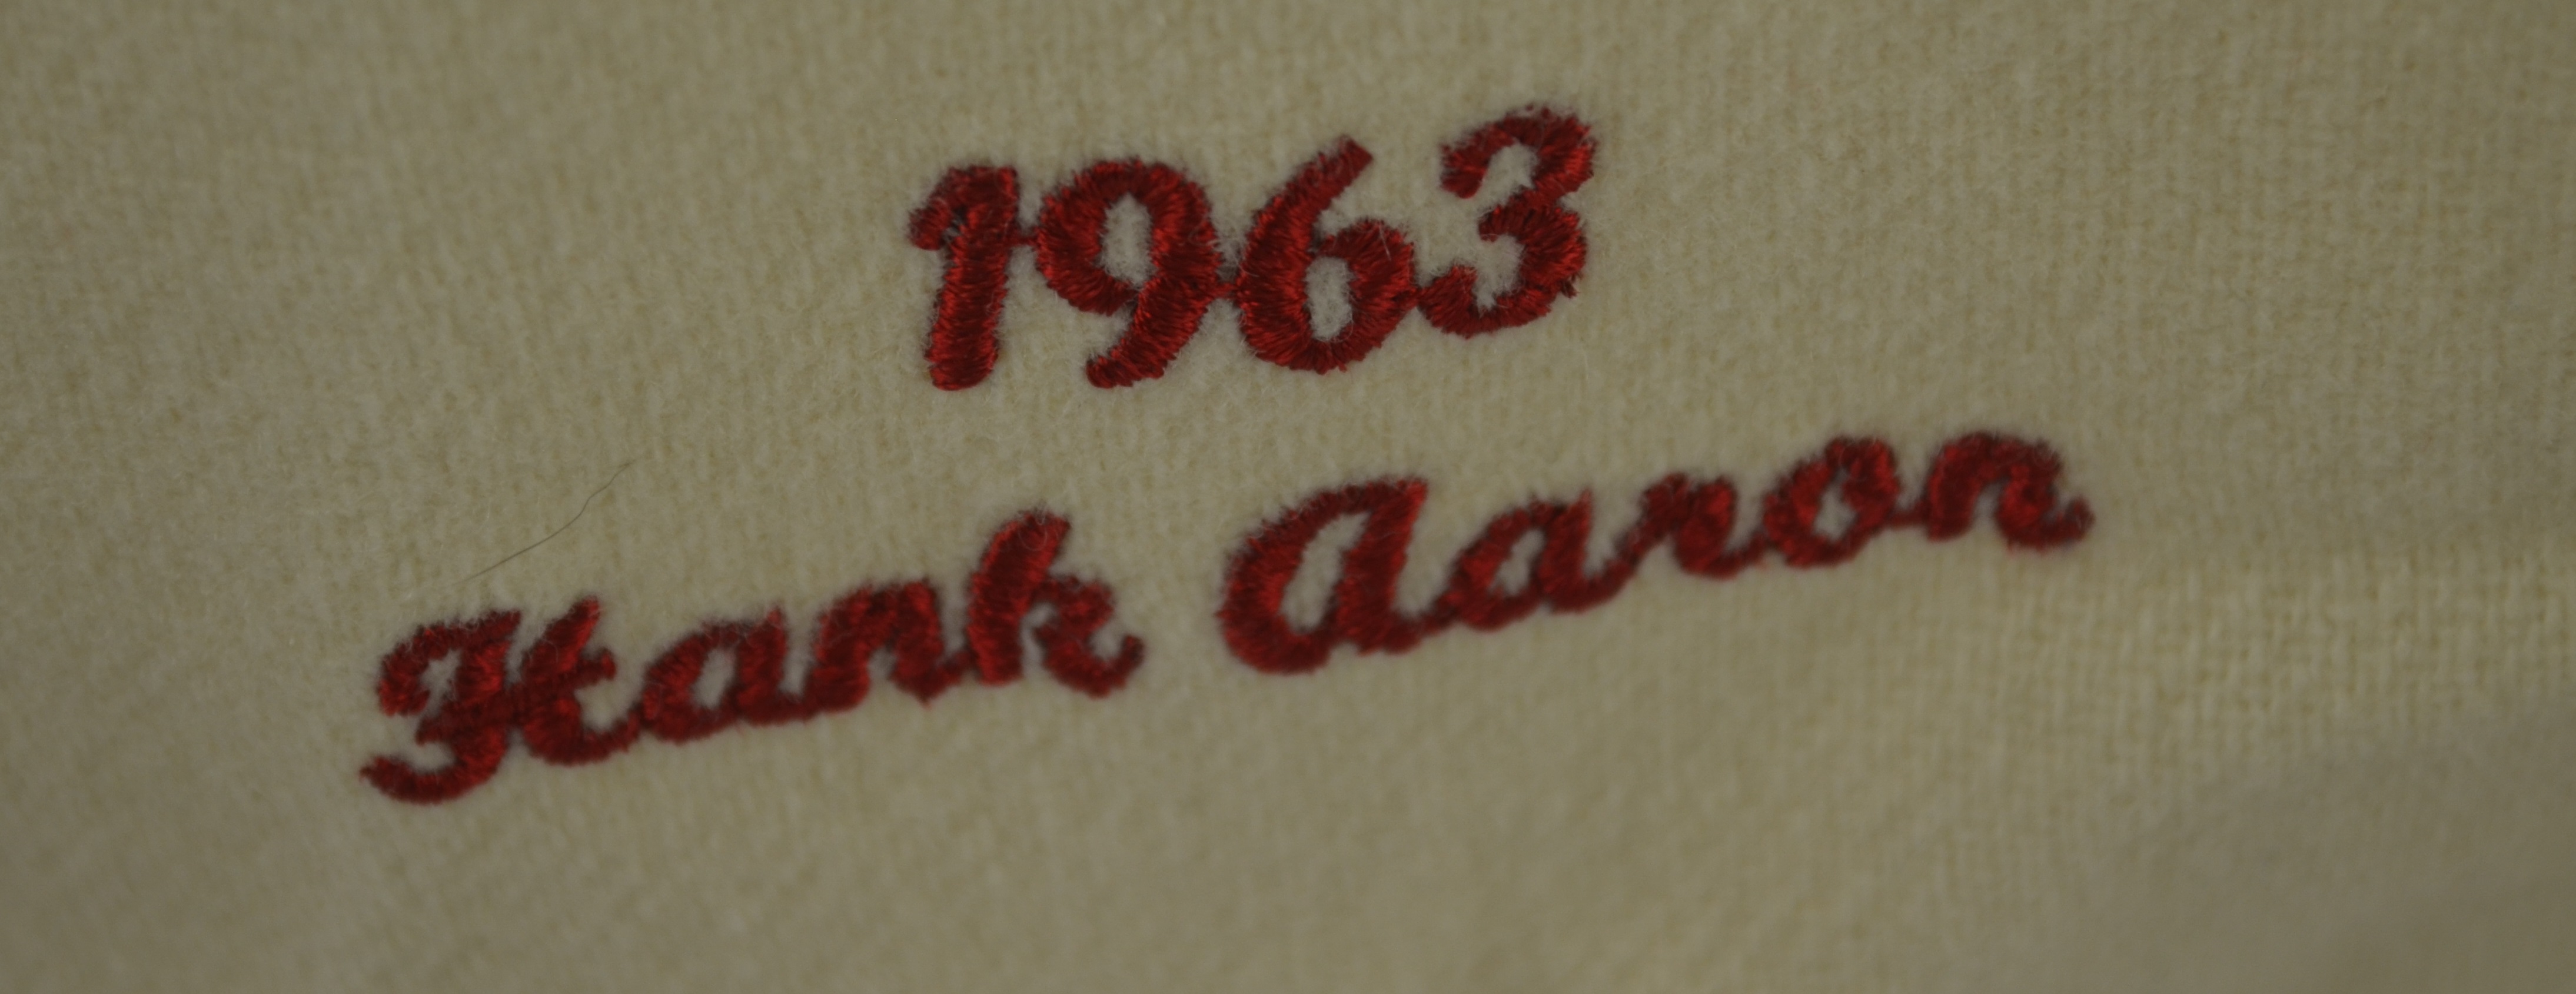 Hank Aaron 1963 Milwaukee Braves Throwback Jersey – Best Sports Jerseys